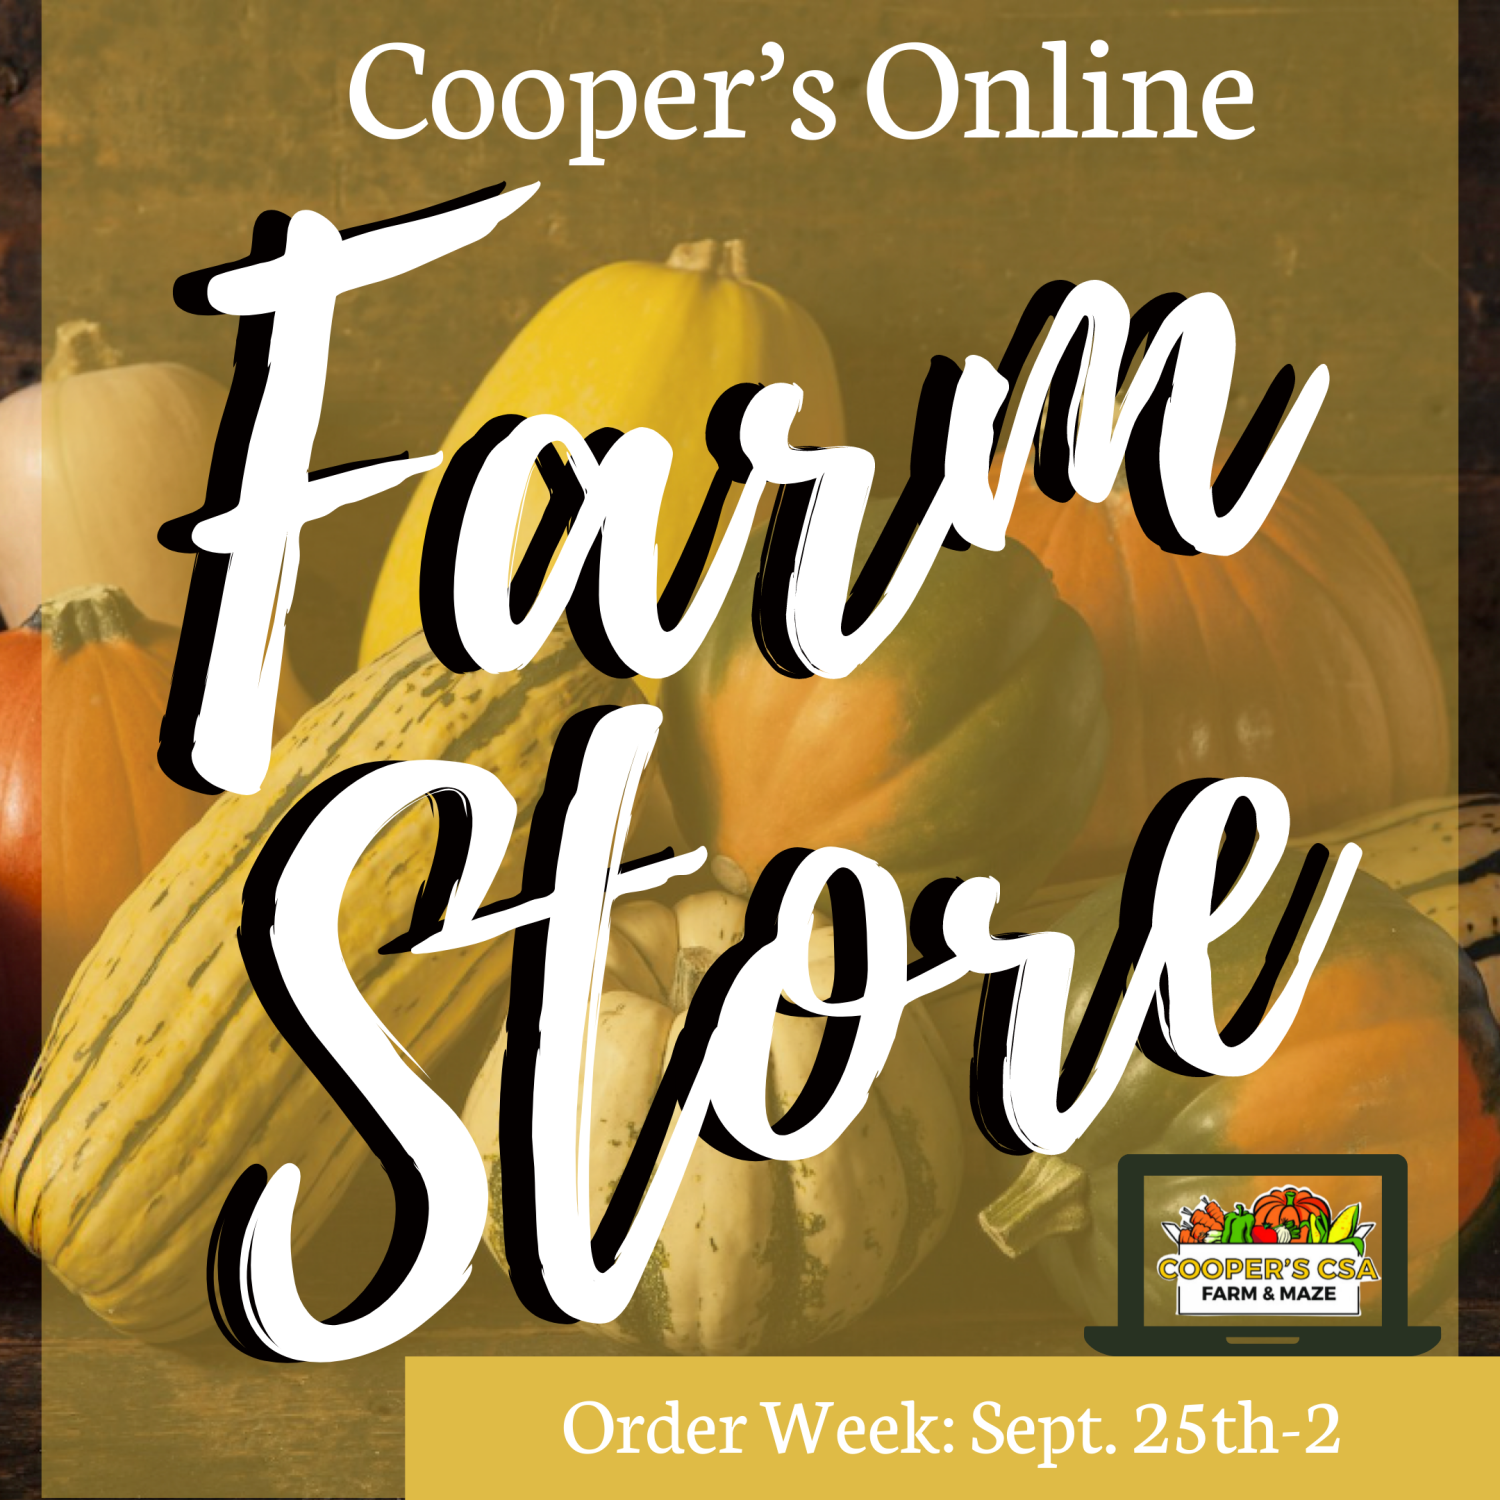 Next Happening: Coopers CSA Online FarmStore- Order week Sept. 25-28th